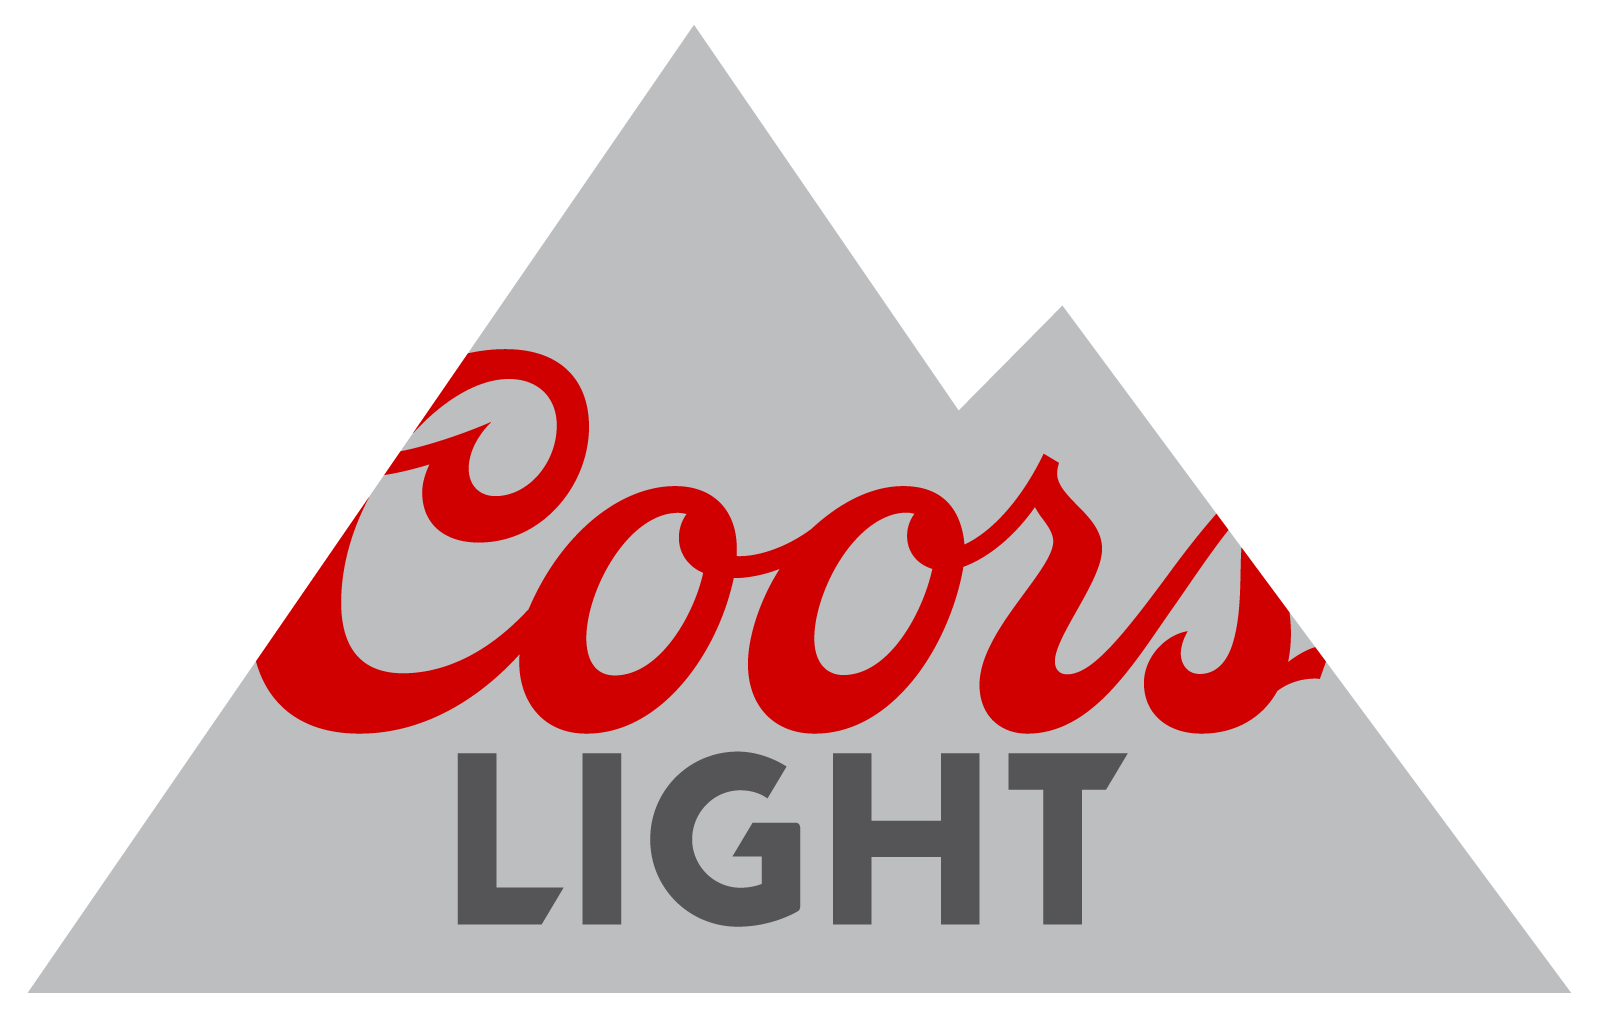 Coors Light 2015 logo.png